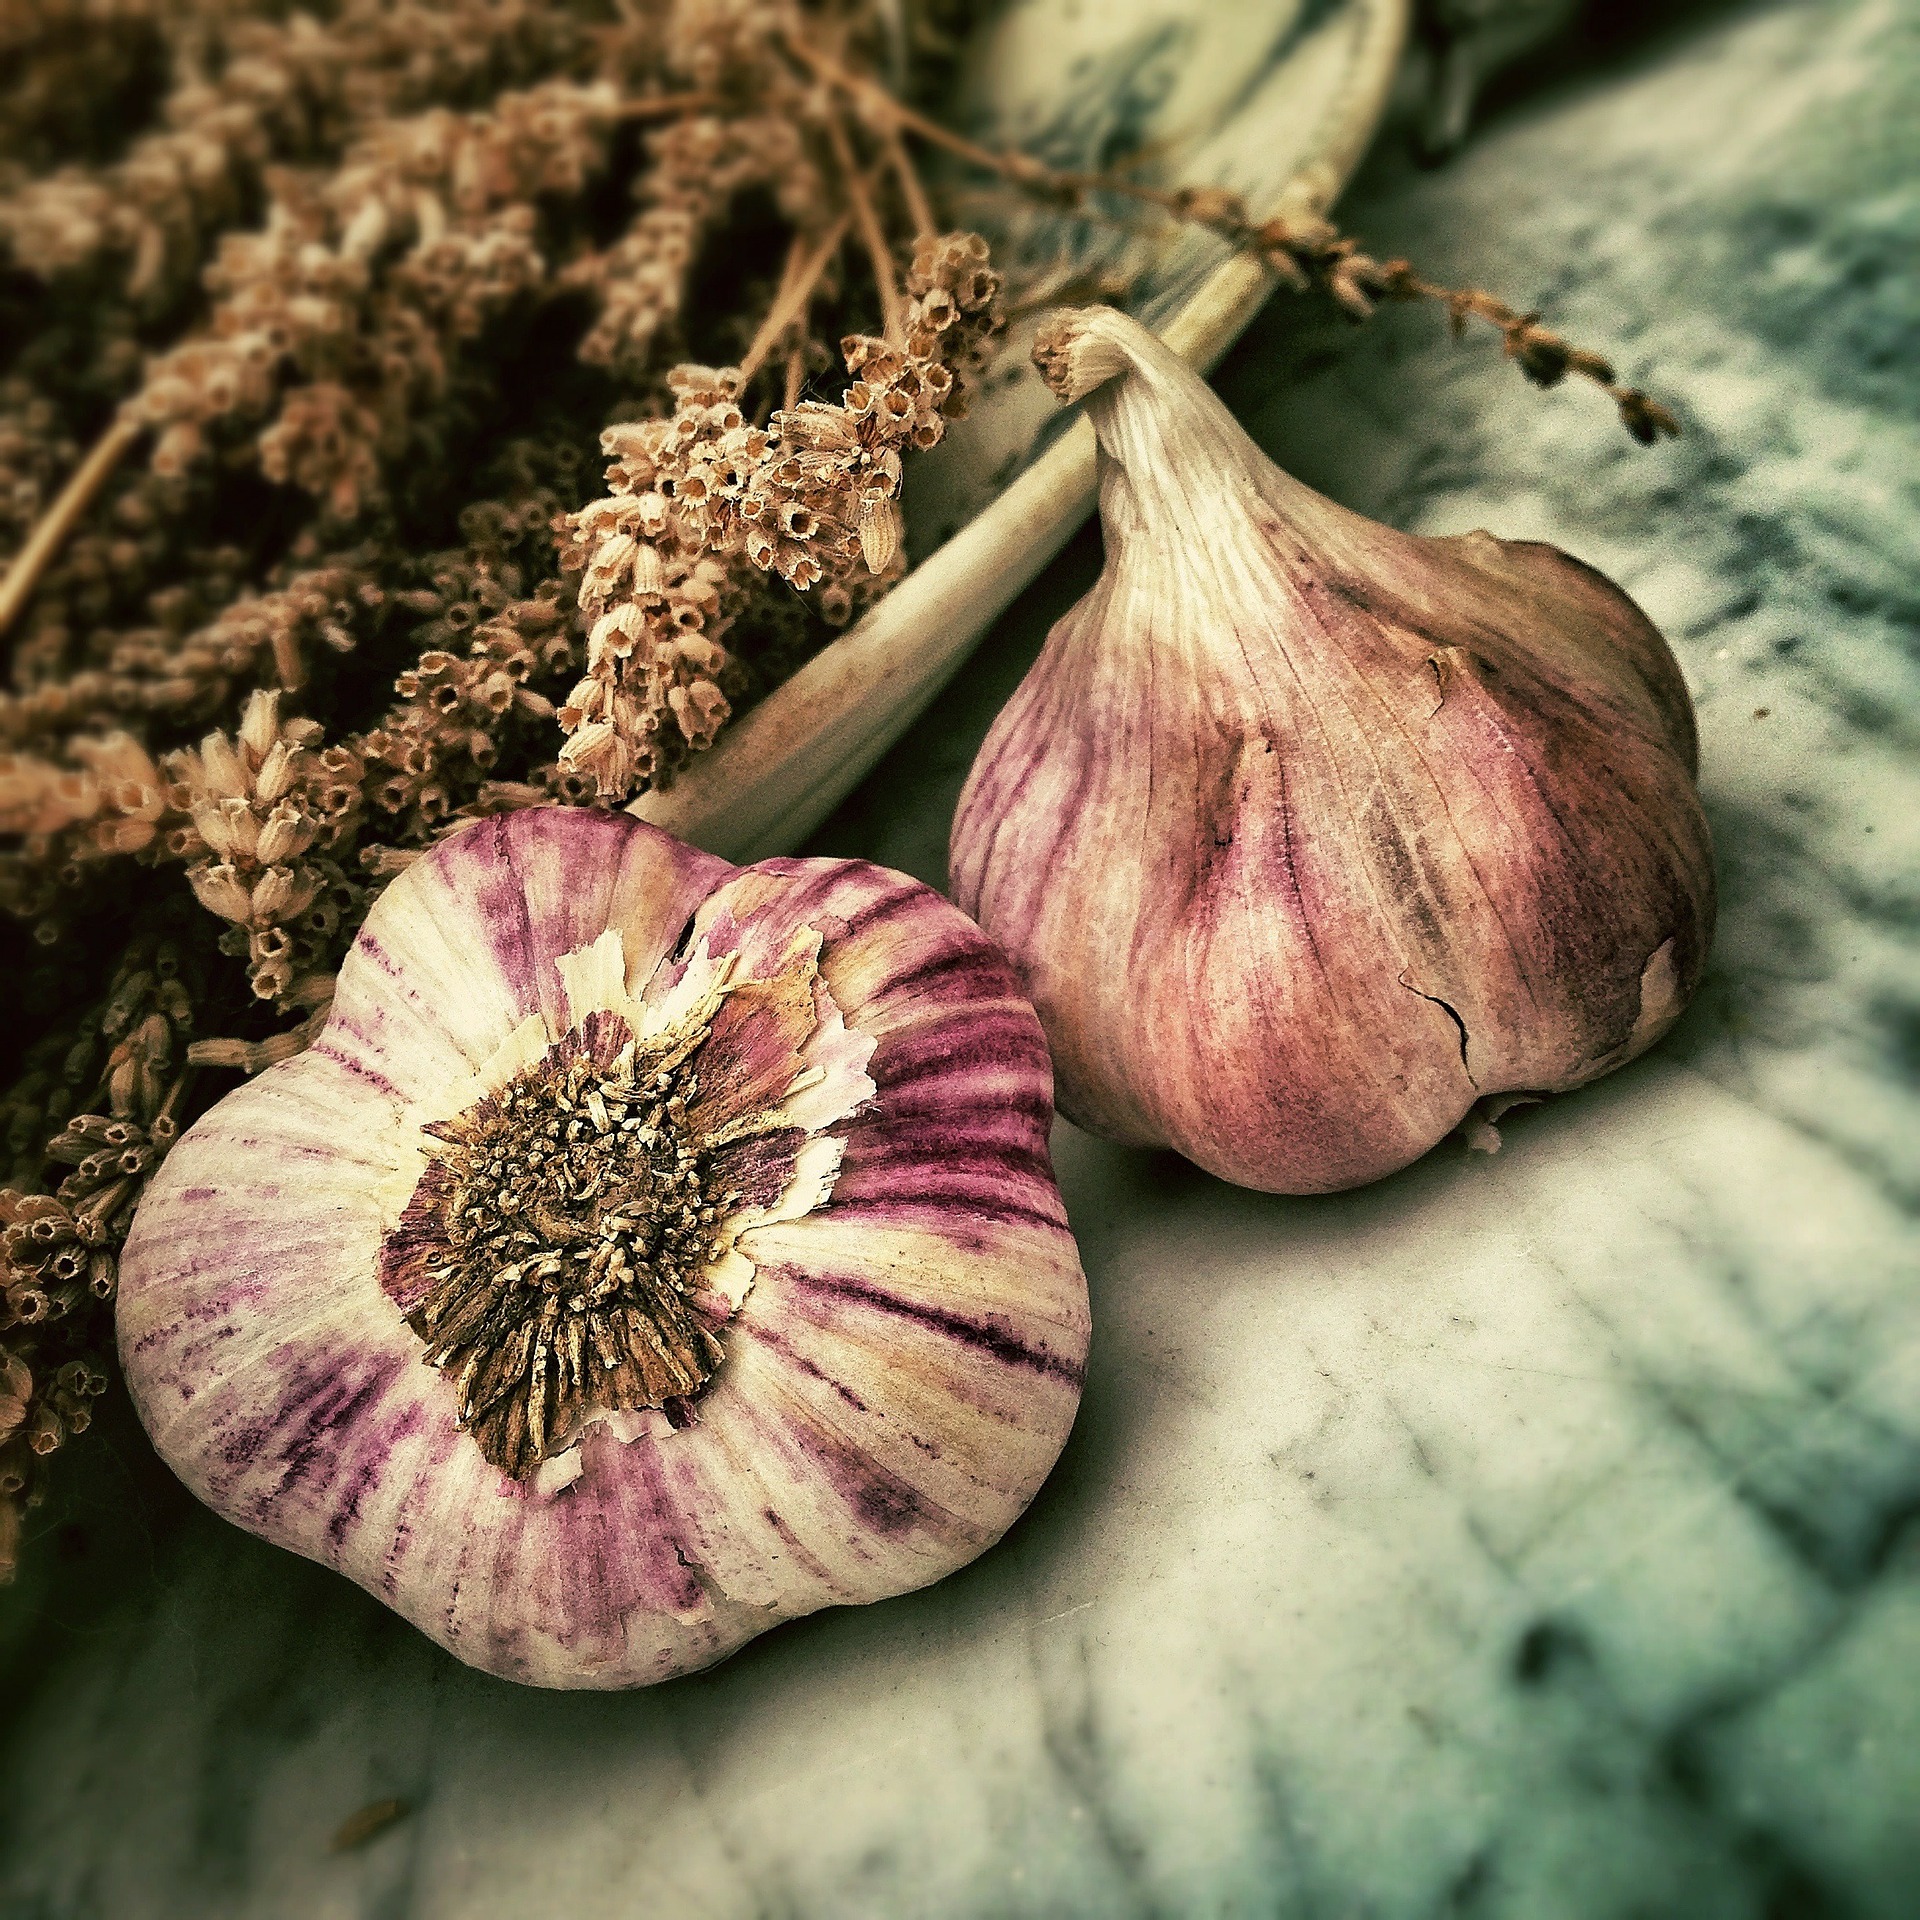 garlic and herbs on a cloth